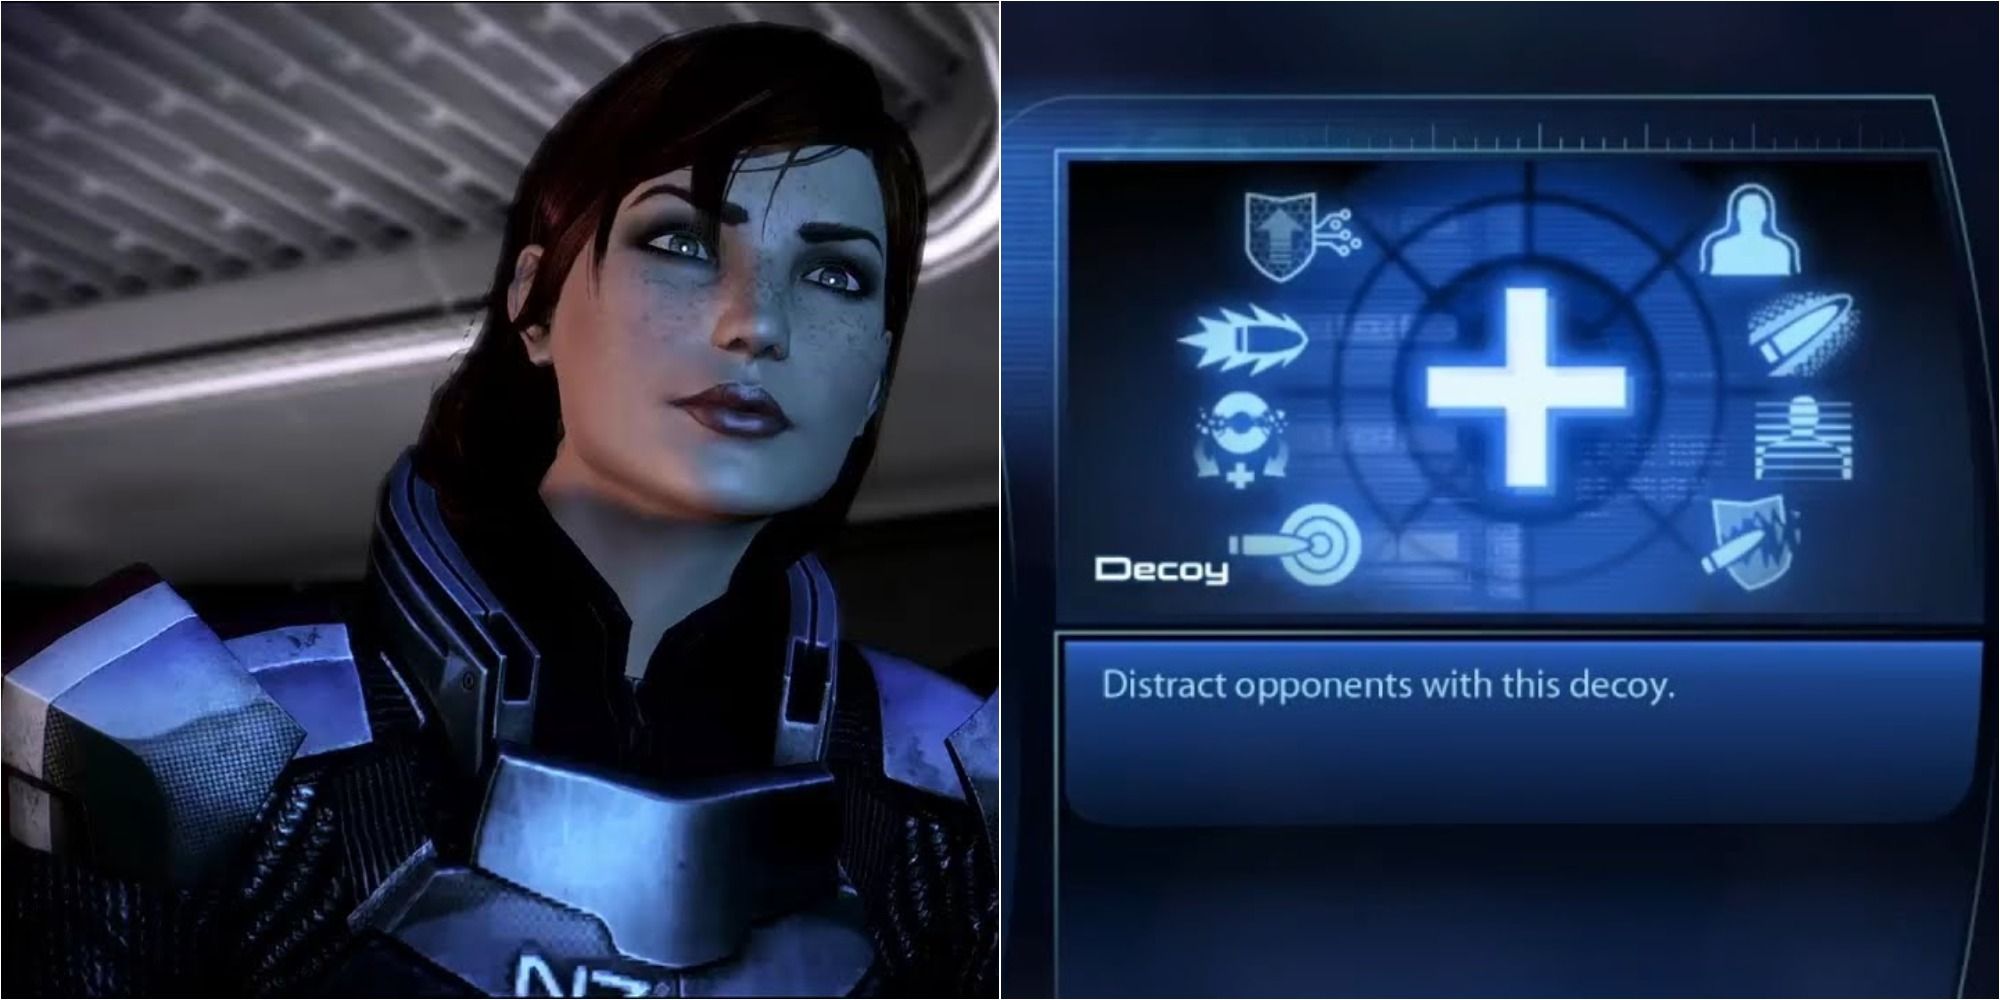 Mass Effect 3 Featured Split Image Of Shepard And Bonus Powers